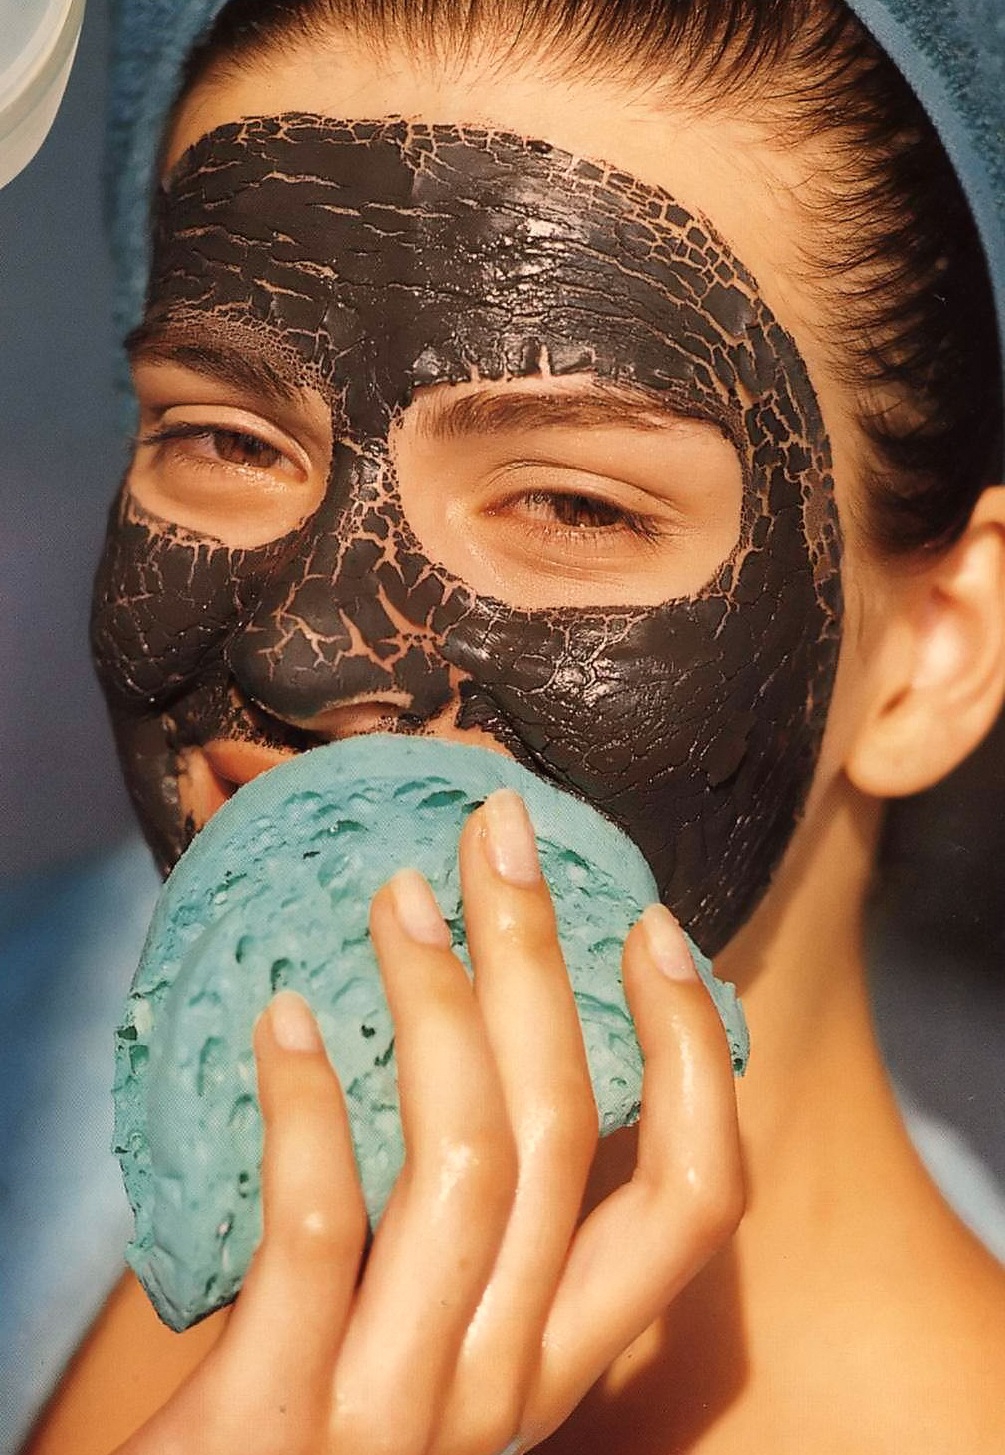 Чем помогают маски для лица. Маска для лица. М̆̈ӑ̈с̆̈к̆̈й̈ д̆̈л̆̈я̆̈ л̆̈й̈ц̆̈ӑ̈. Глиняная маска для лица. Маска из глины для лица.